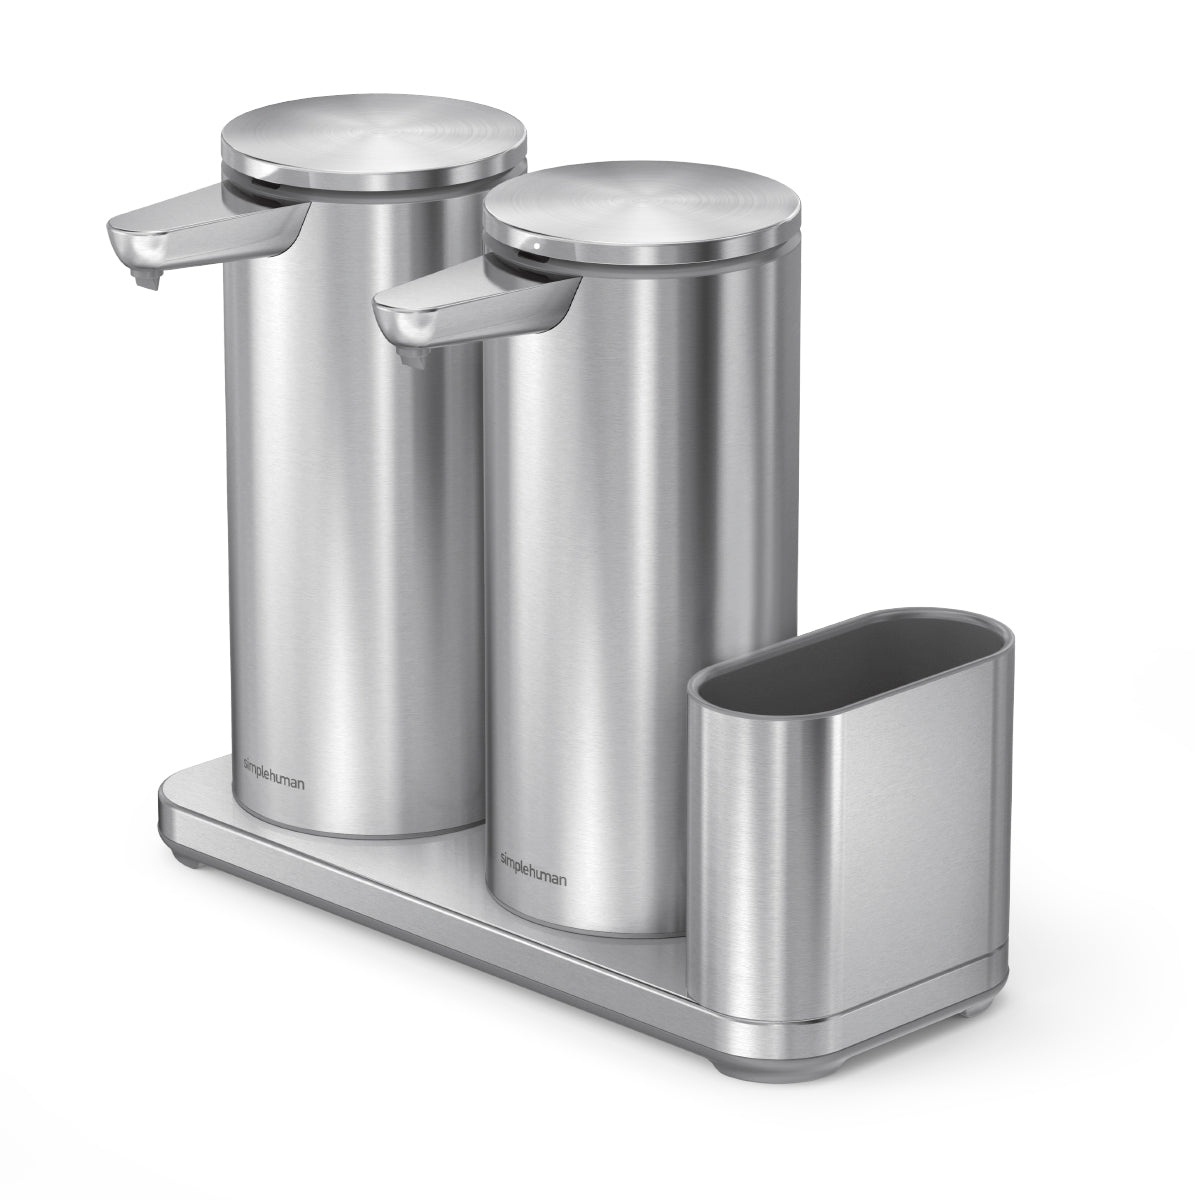 SimpleHuman Soap Dispenser Review 